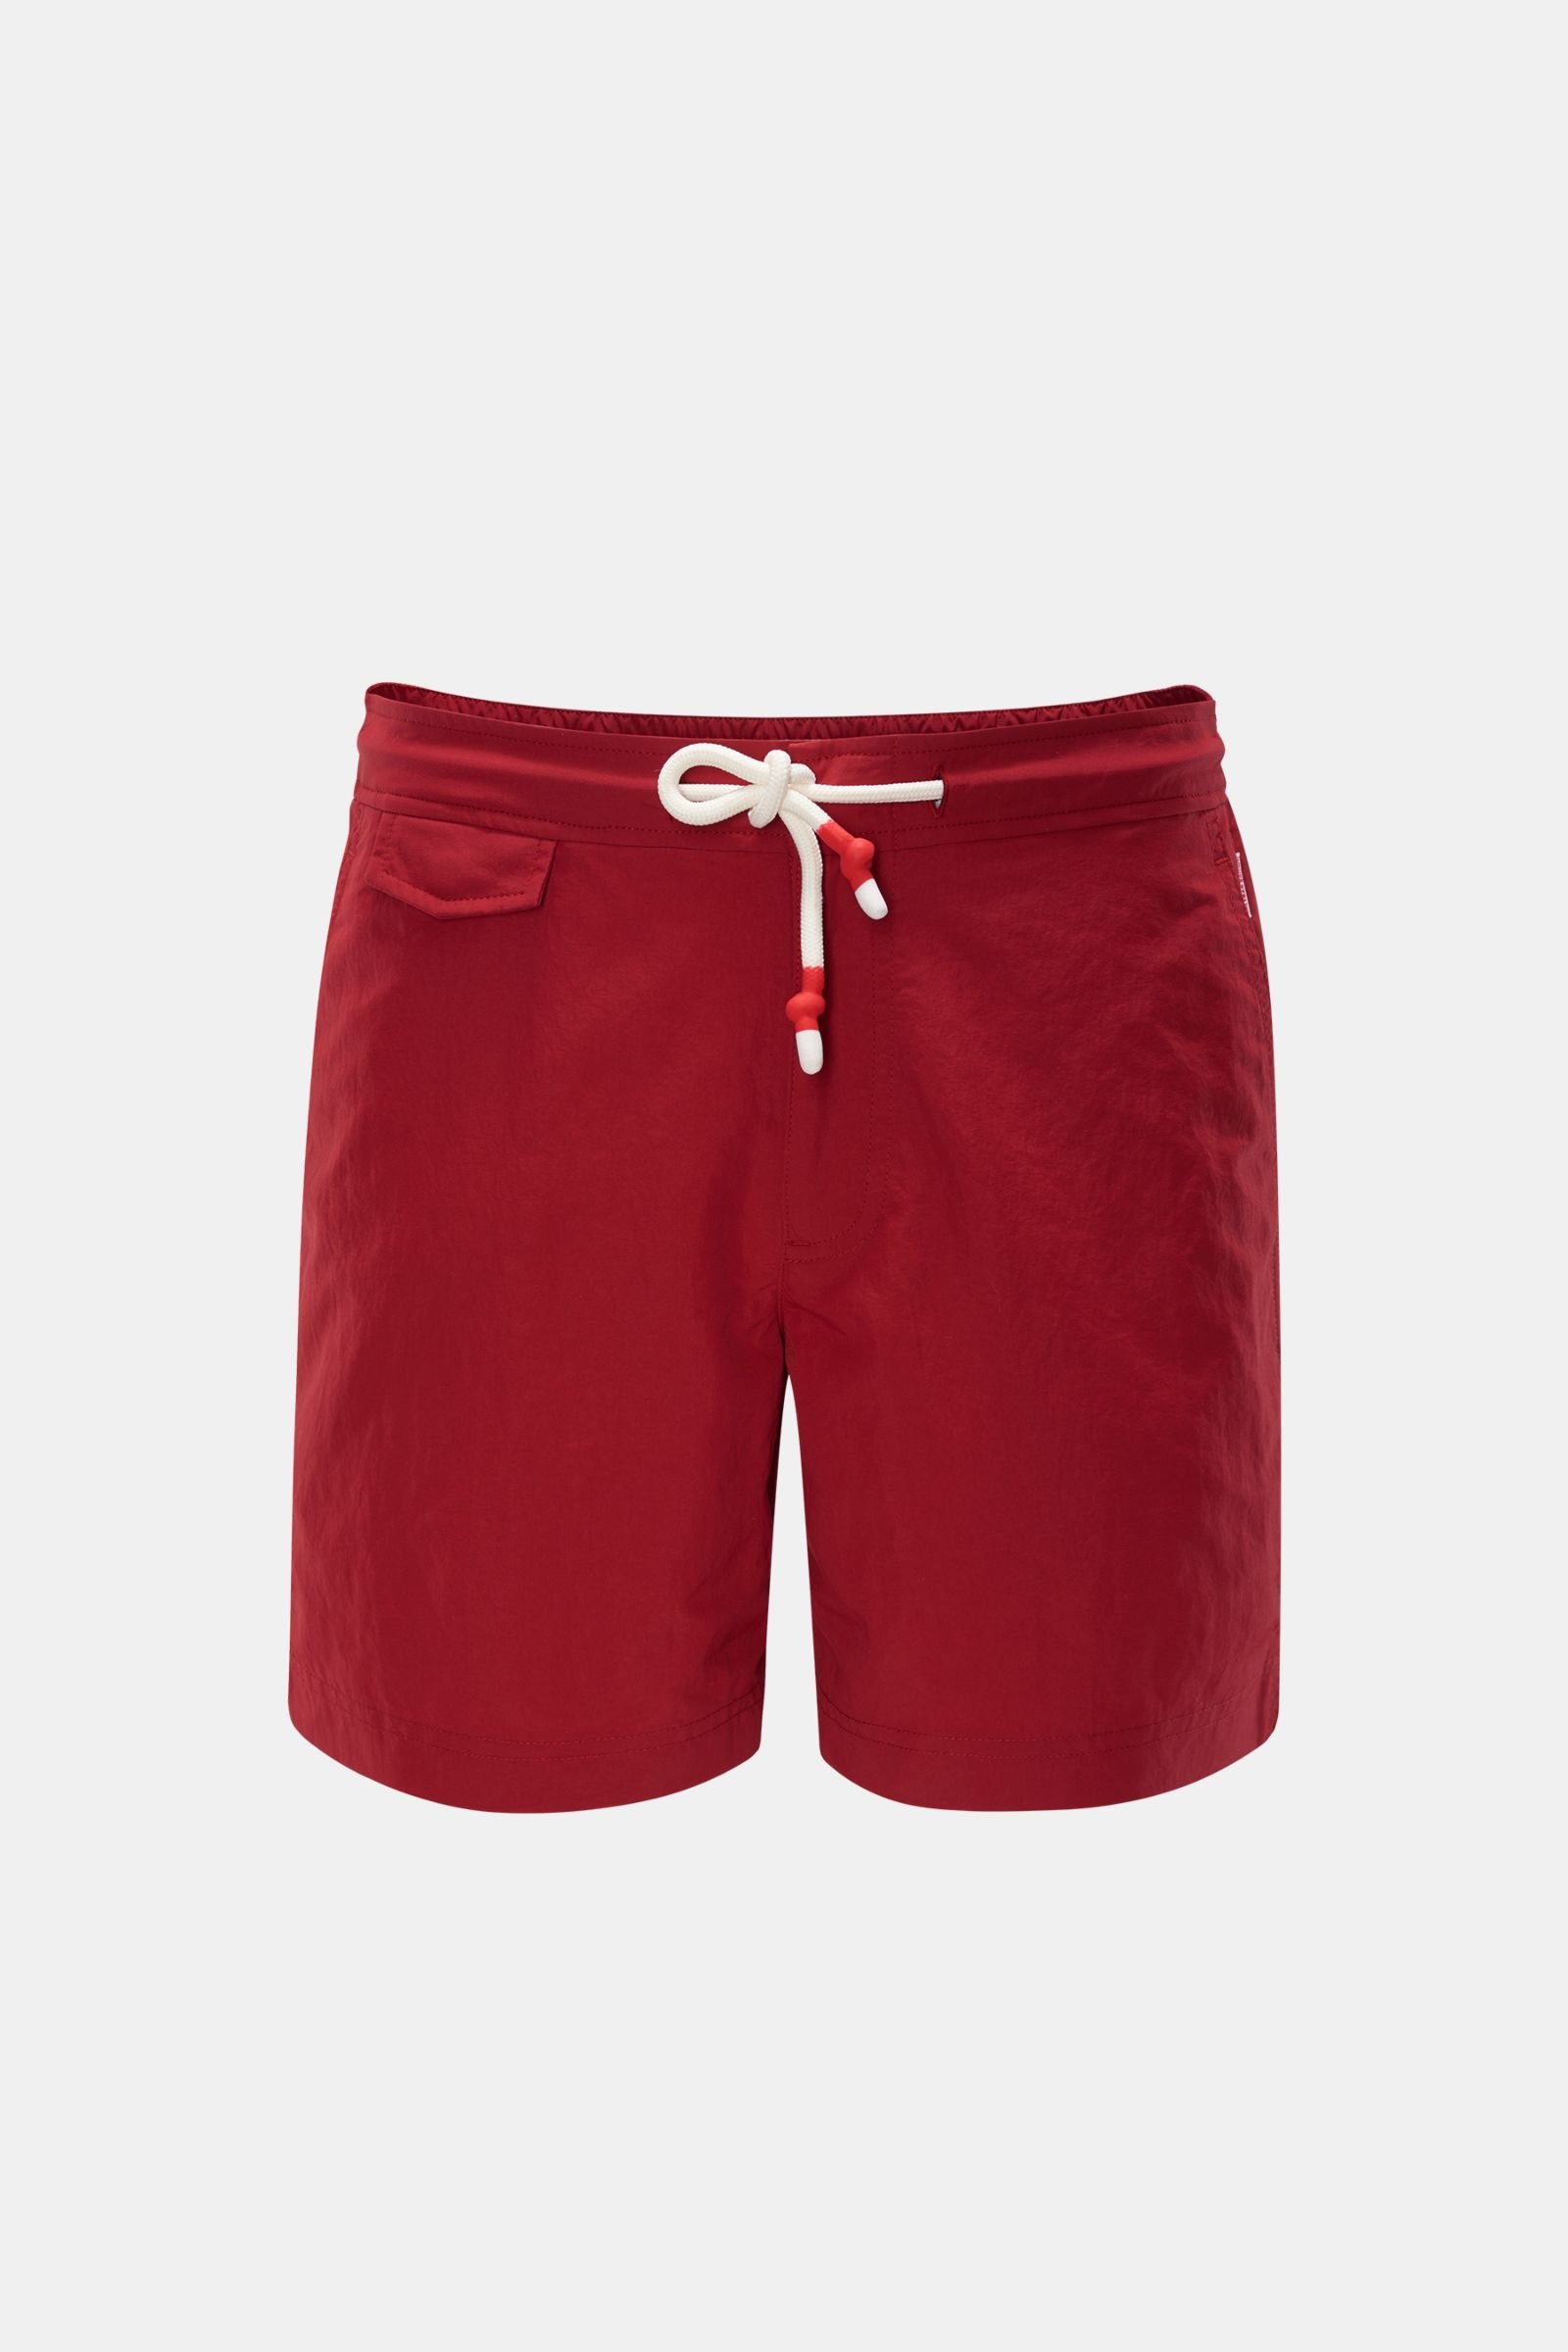 ORLEBAR BROWN swim shorts 'Standard' dark red | BRAUN Hamburg